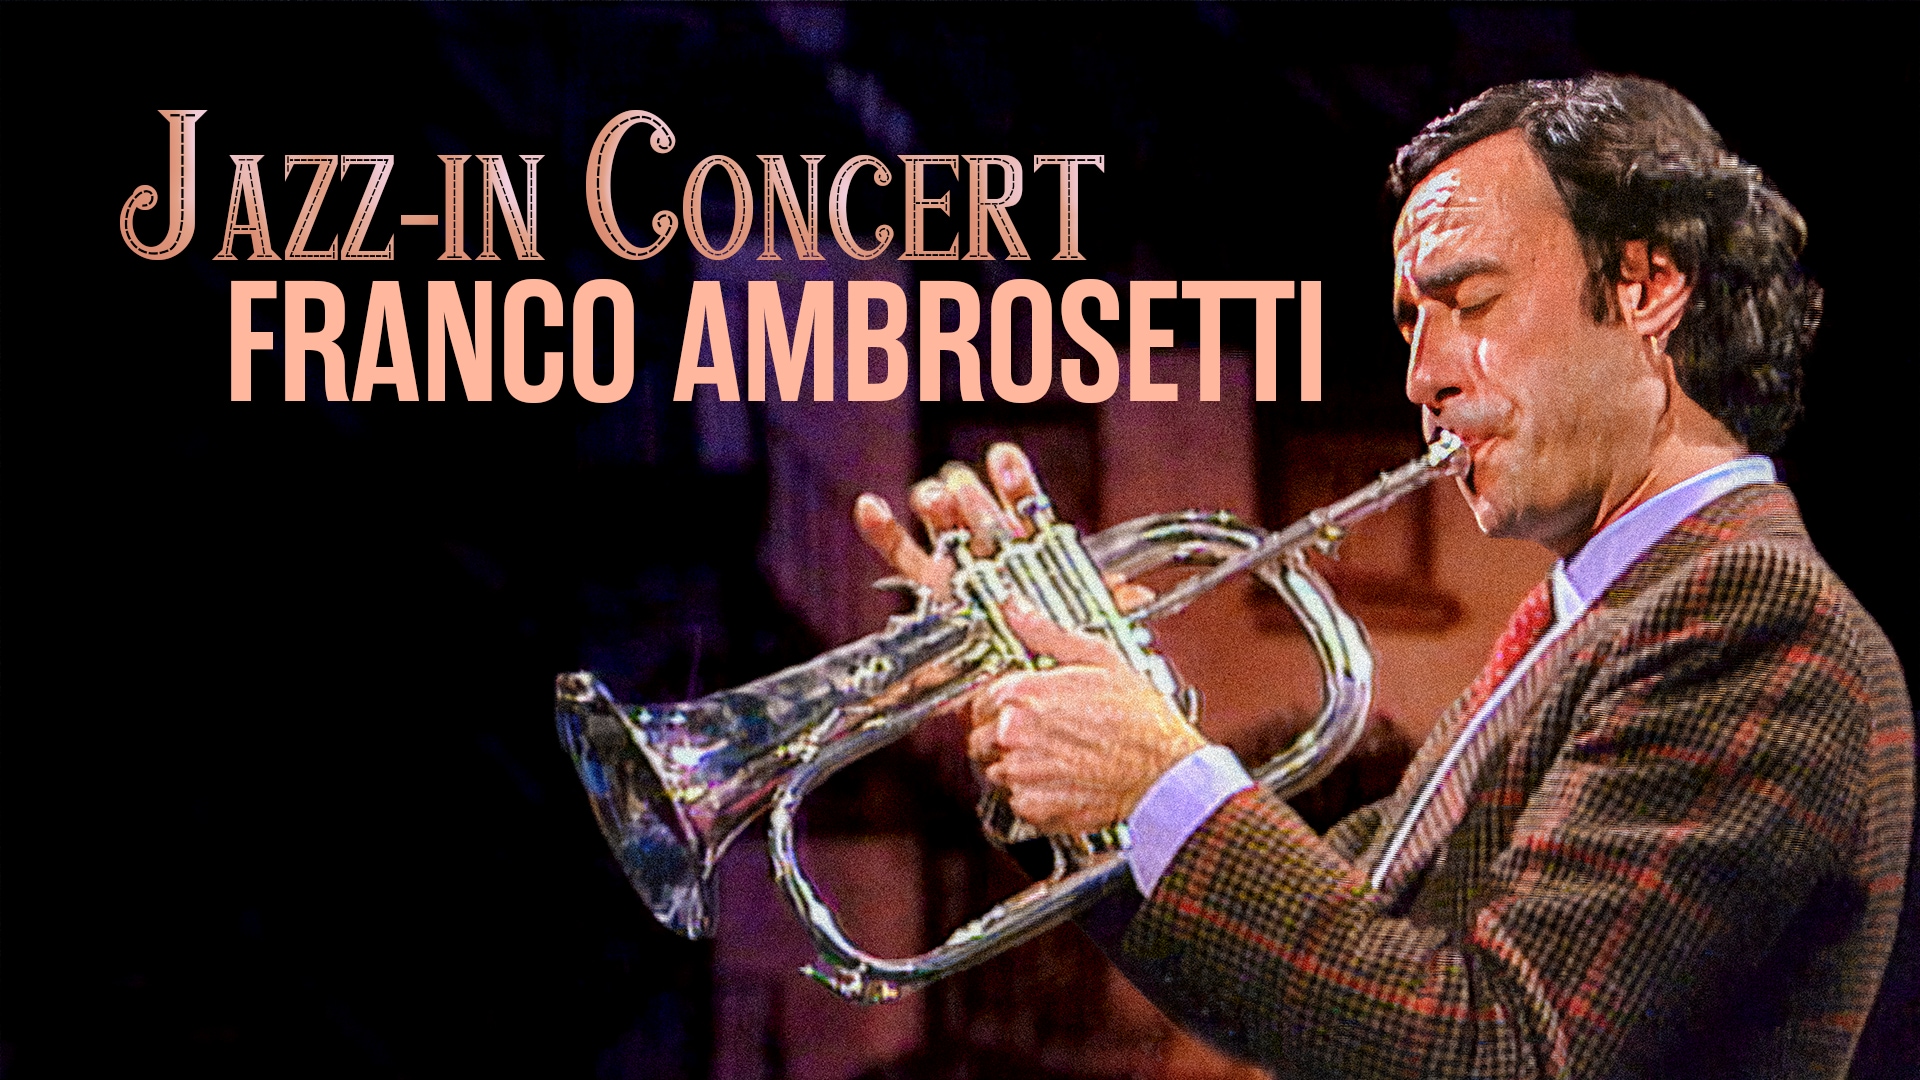 Jazz-In Concert : Franco Ambrosetti